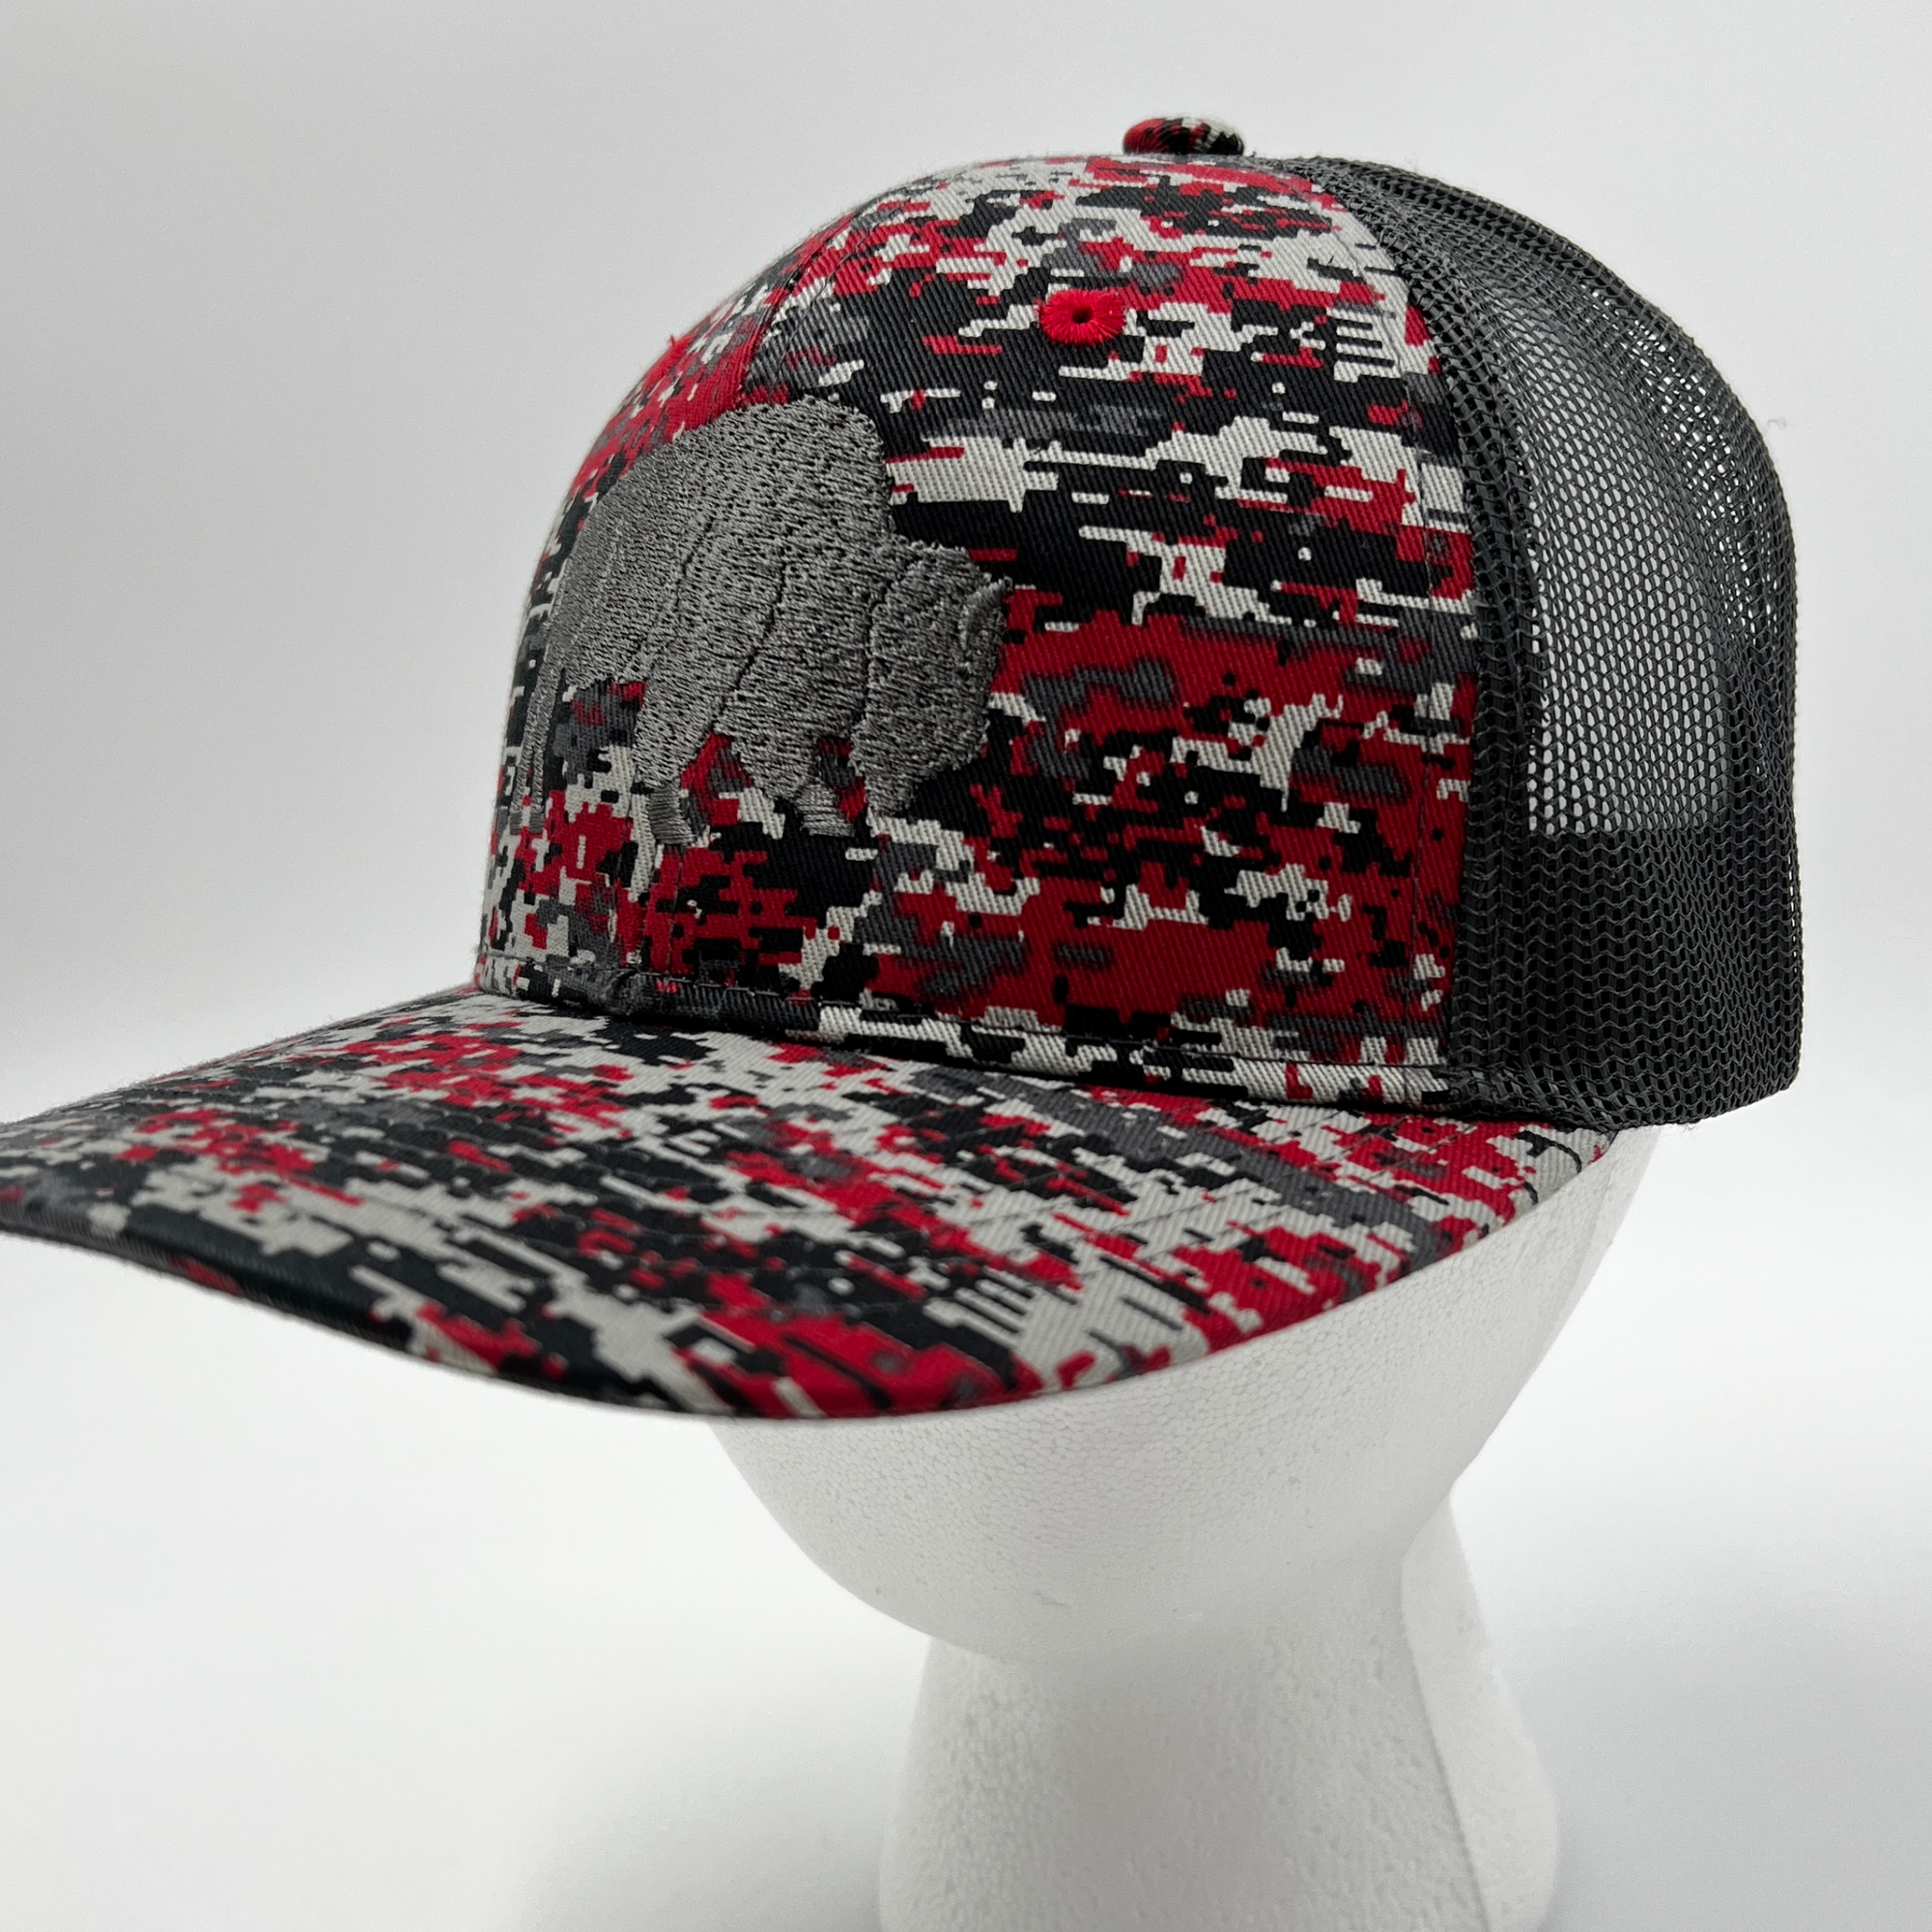 BFLO Red &amp; Black Digital Camo Adjustable Mesh Snapback Hat